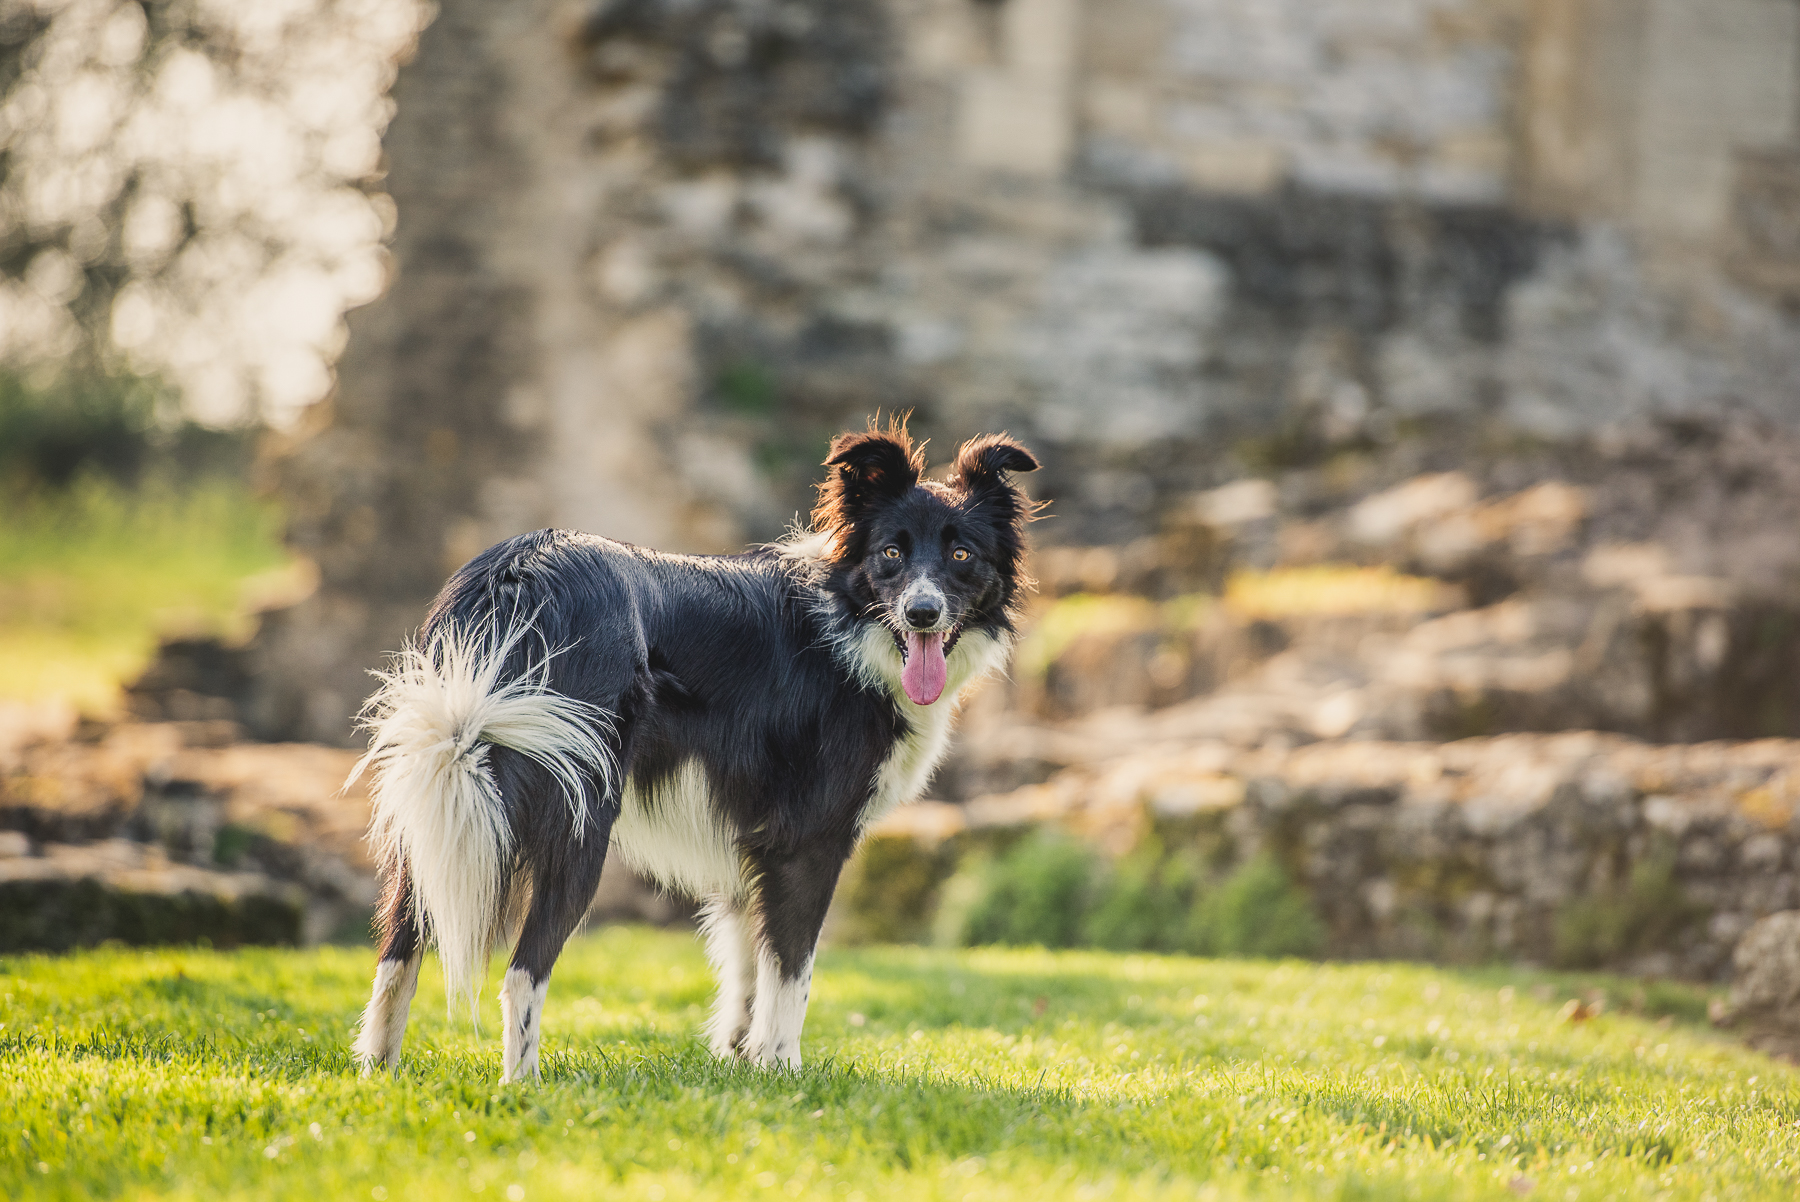 Dog next to stone ruins